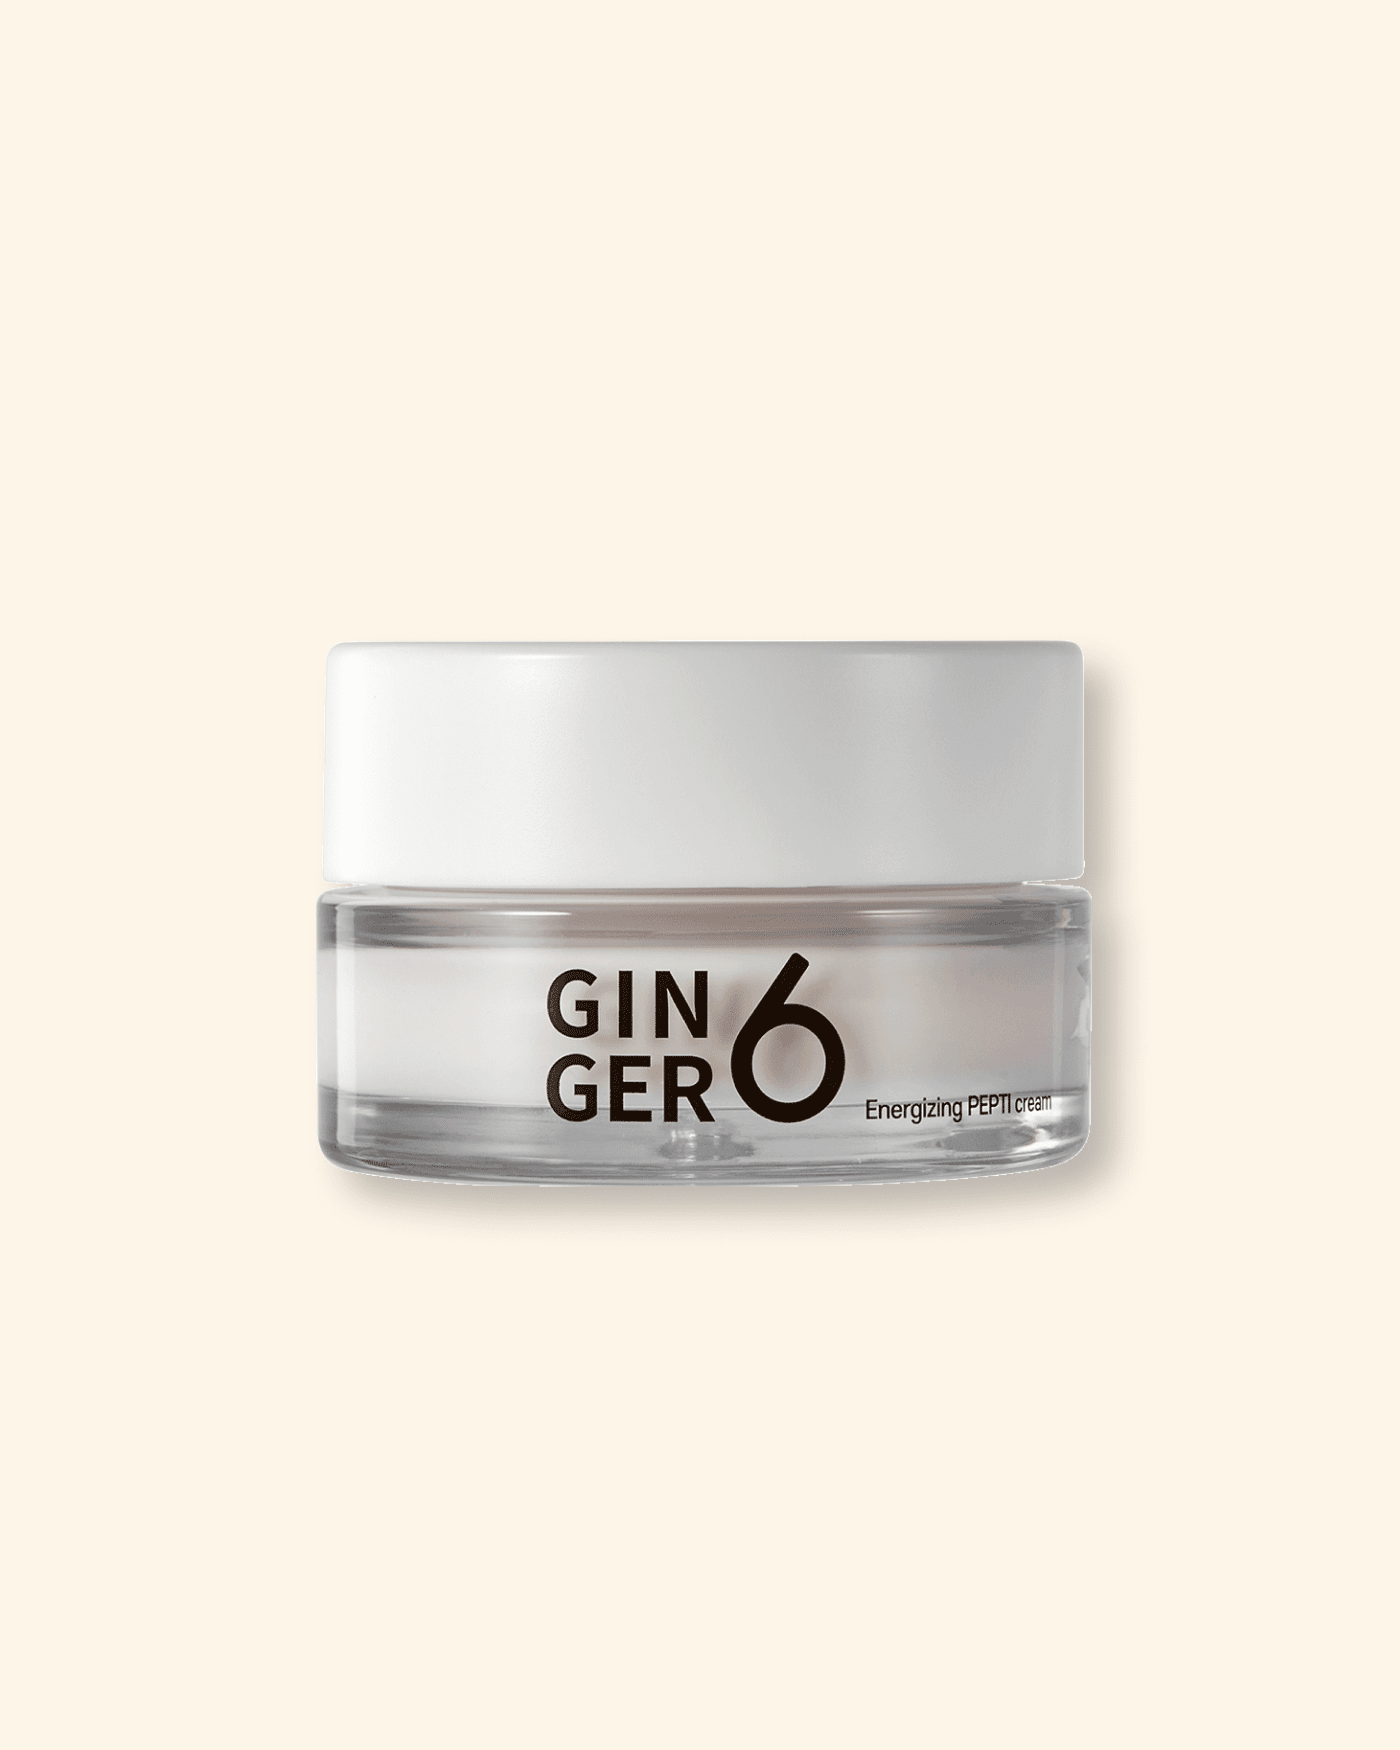 Energizing PEPTI Cream Facial Moisturizer Ginger 6 